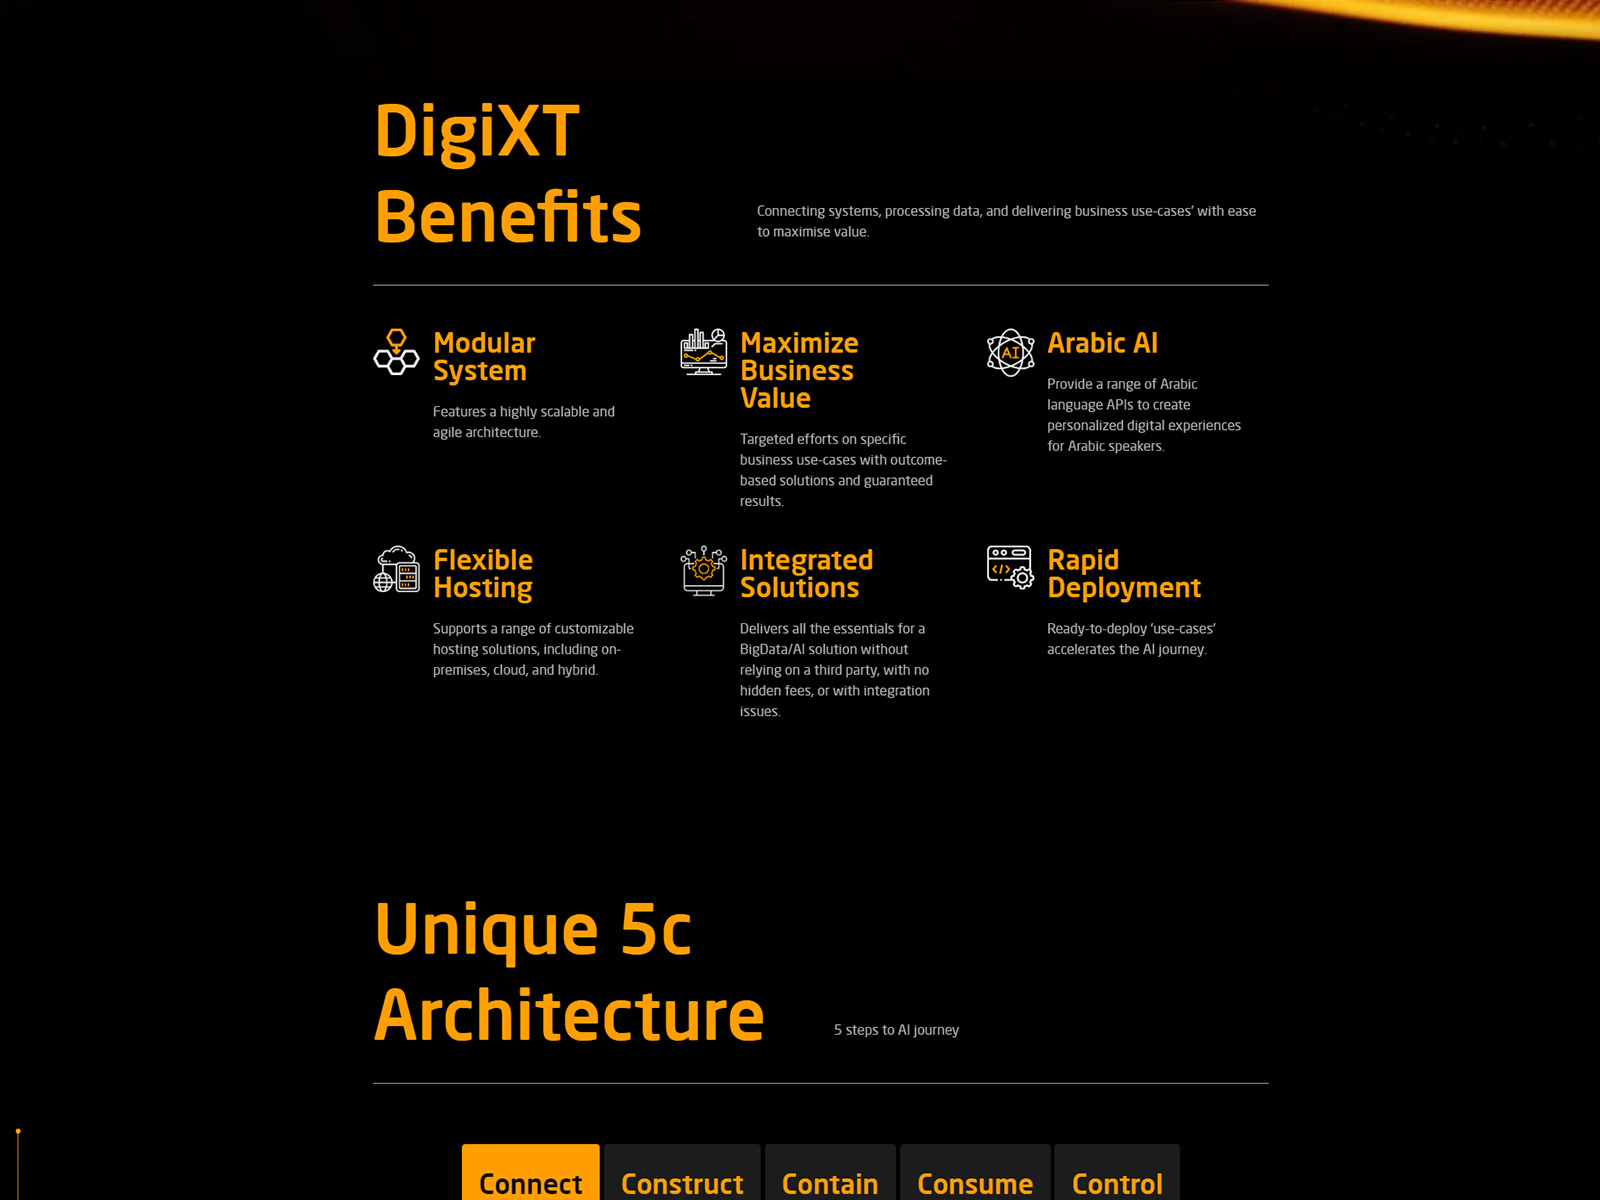 DigiXT - An integrated big data and artificial intelligence platform